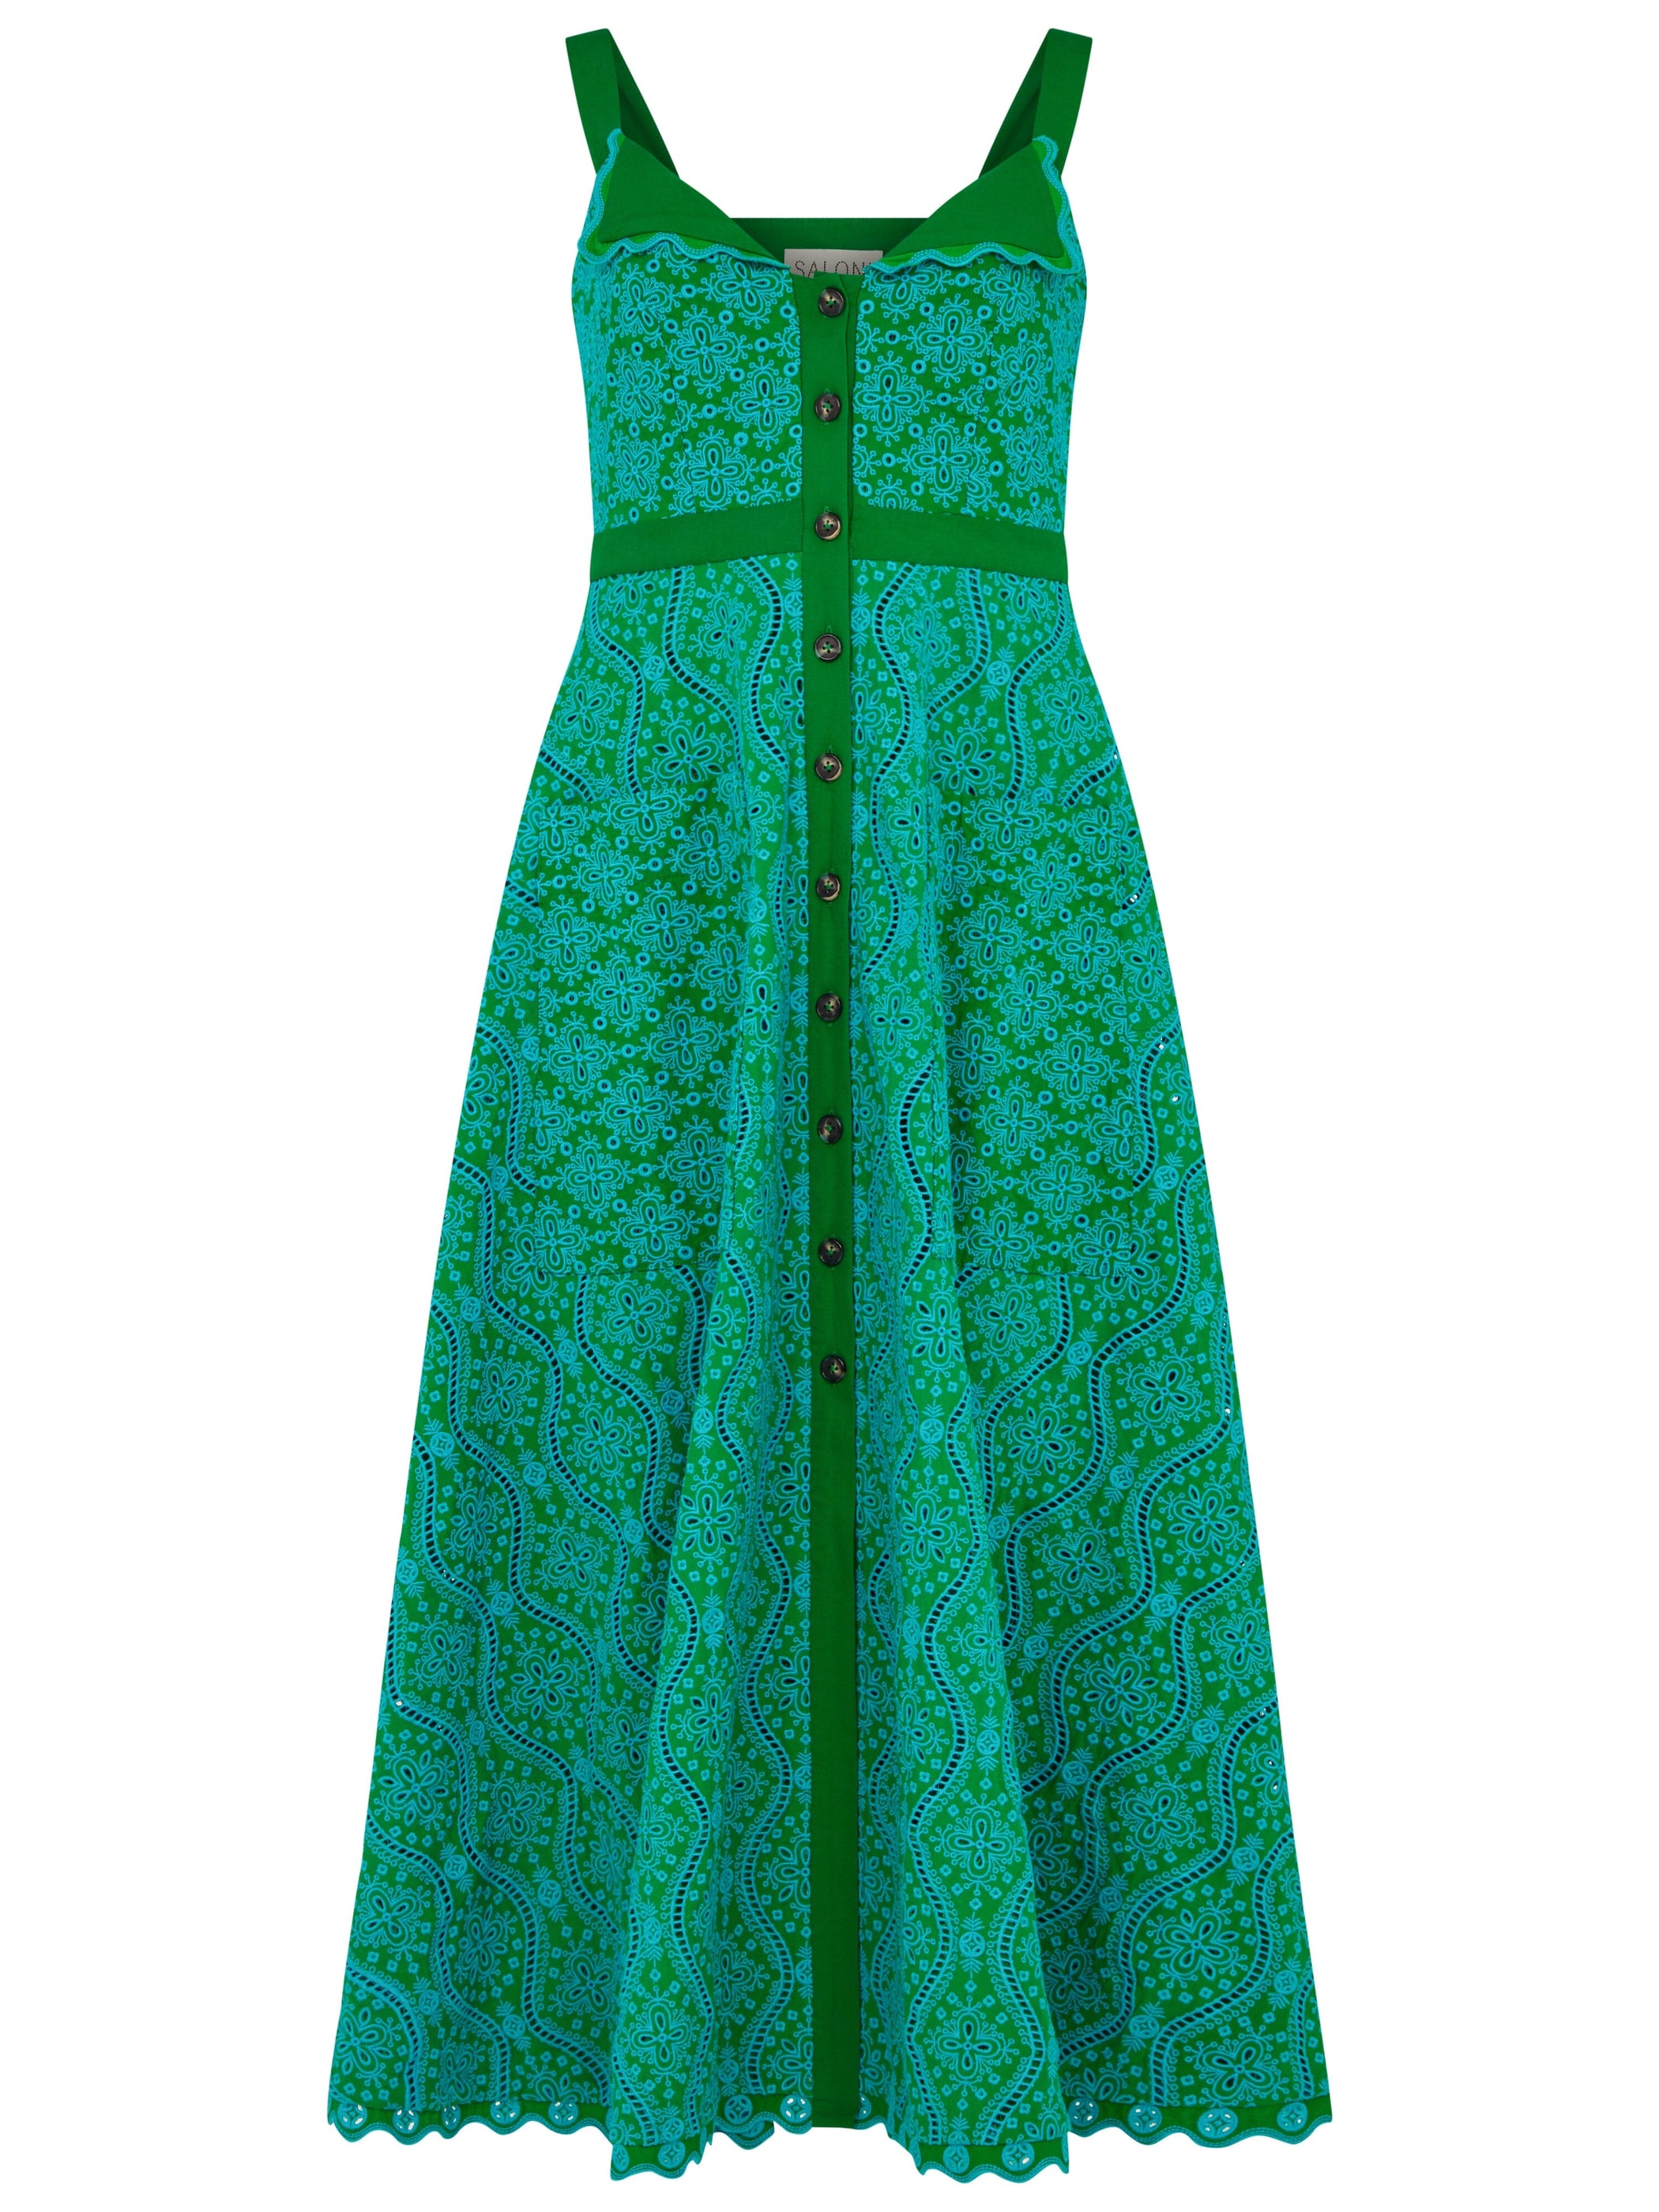 Fara Dress in Emerald Sky